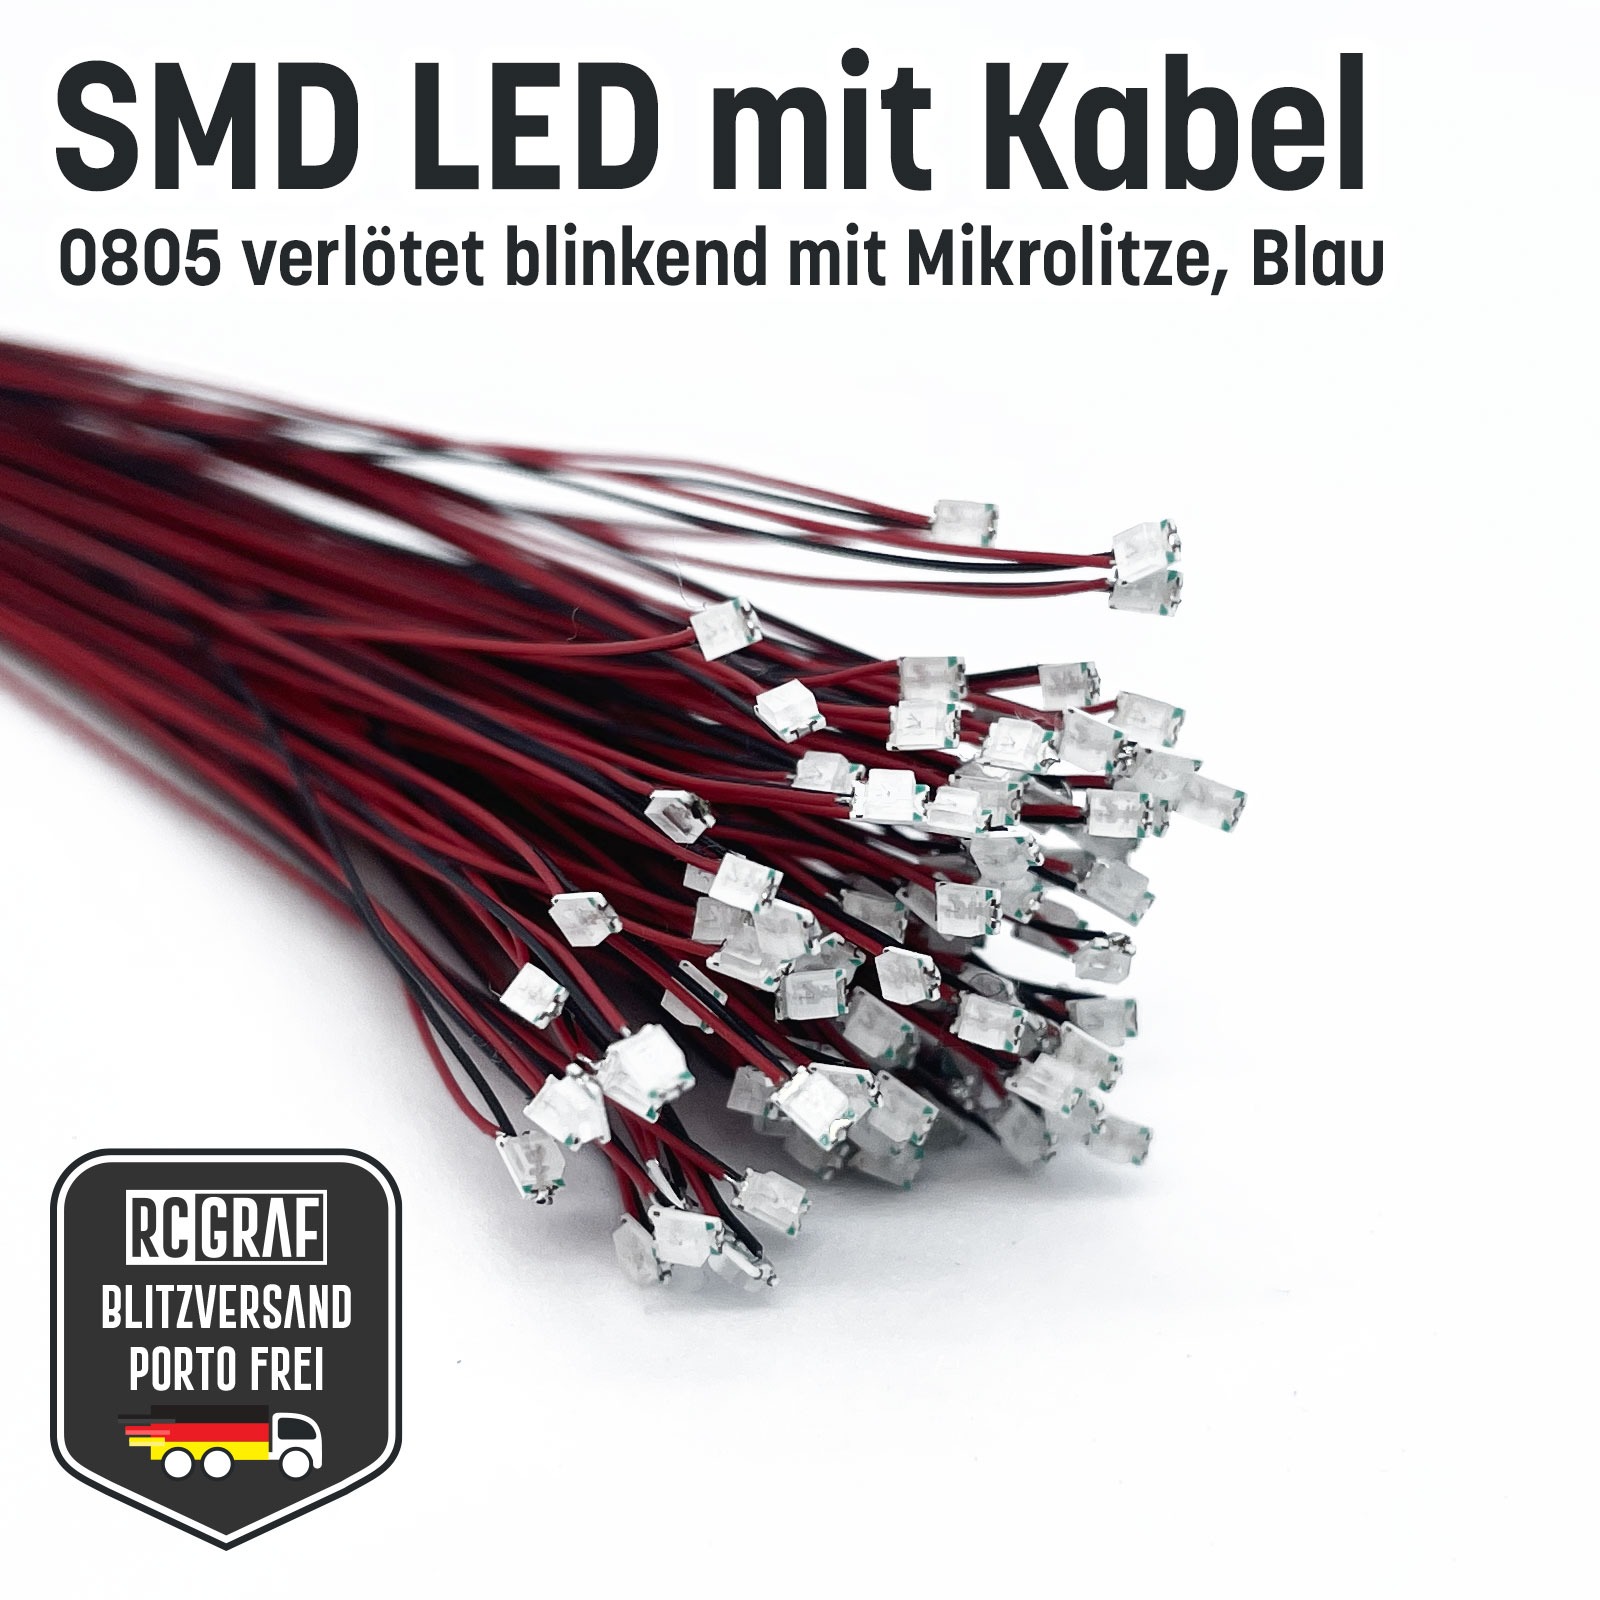 Flashing SMD LED 0805 Microlitz 30cm soldered 2